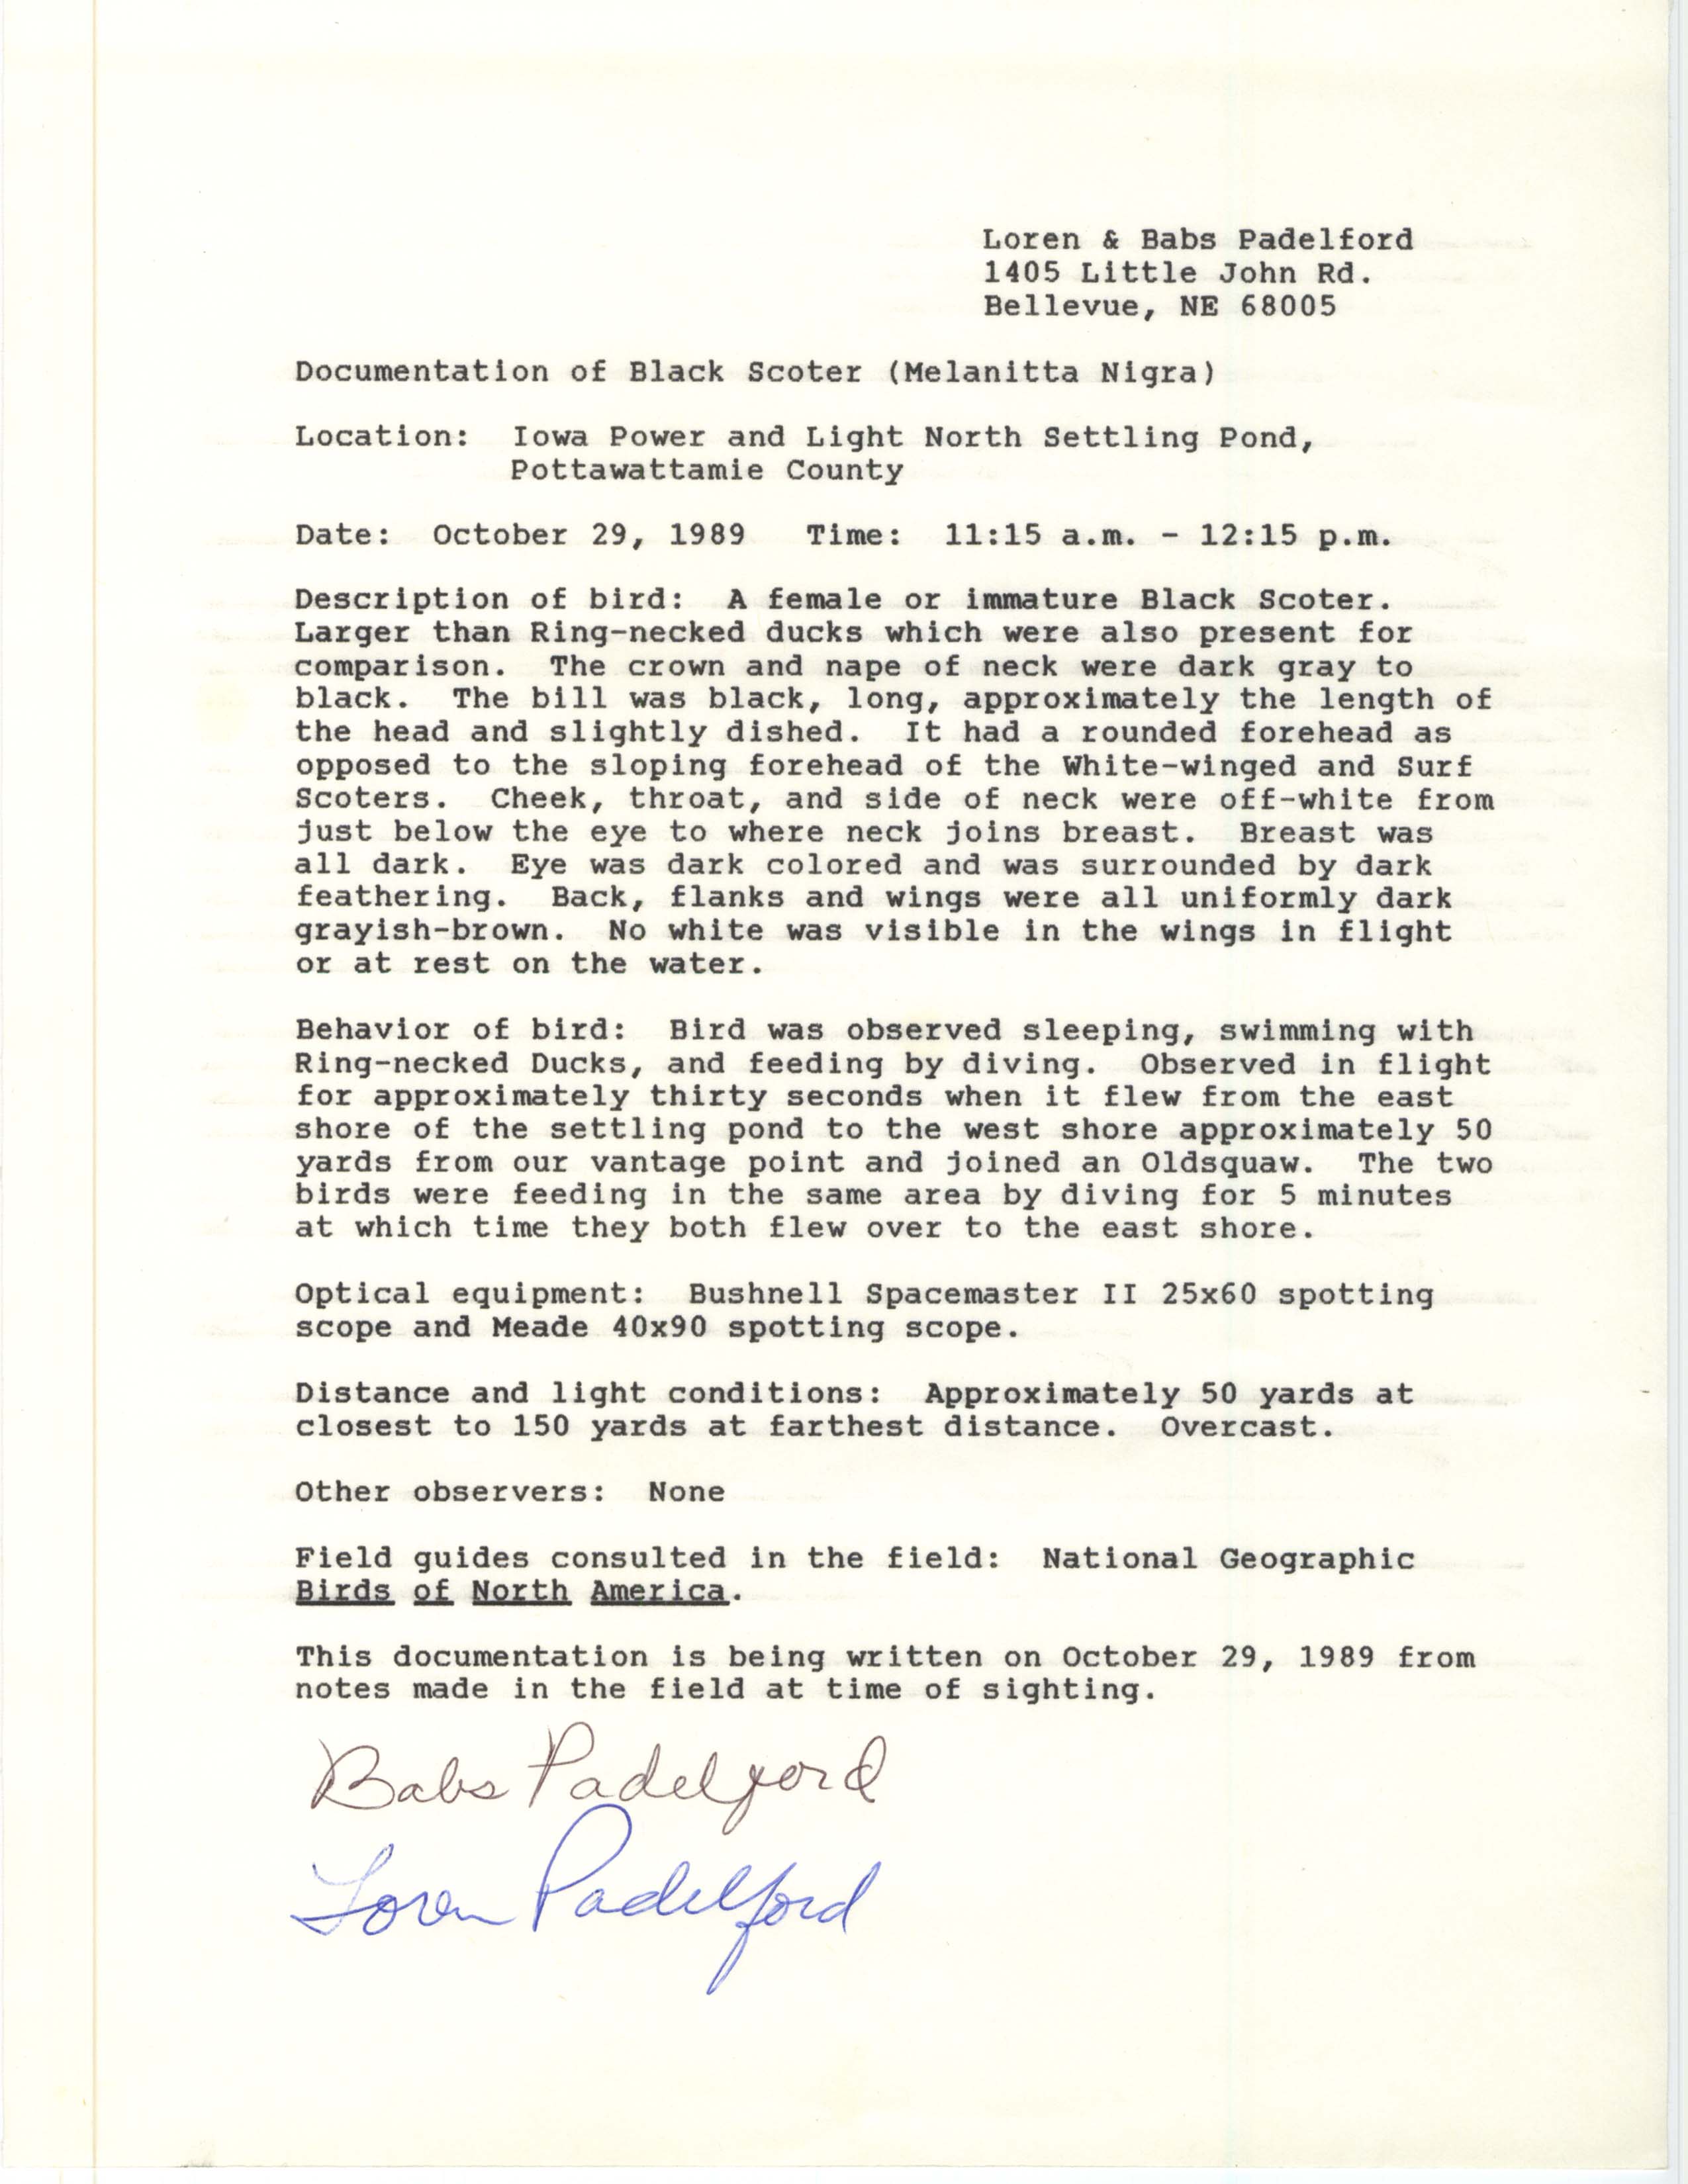 Rare bird documentation form for Black Scoter at MidAmerican Energy Ponds, 1989